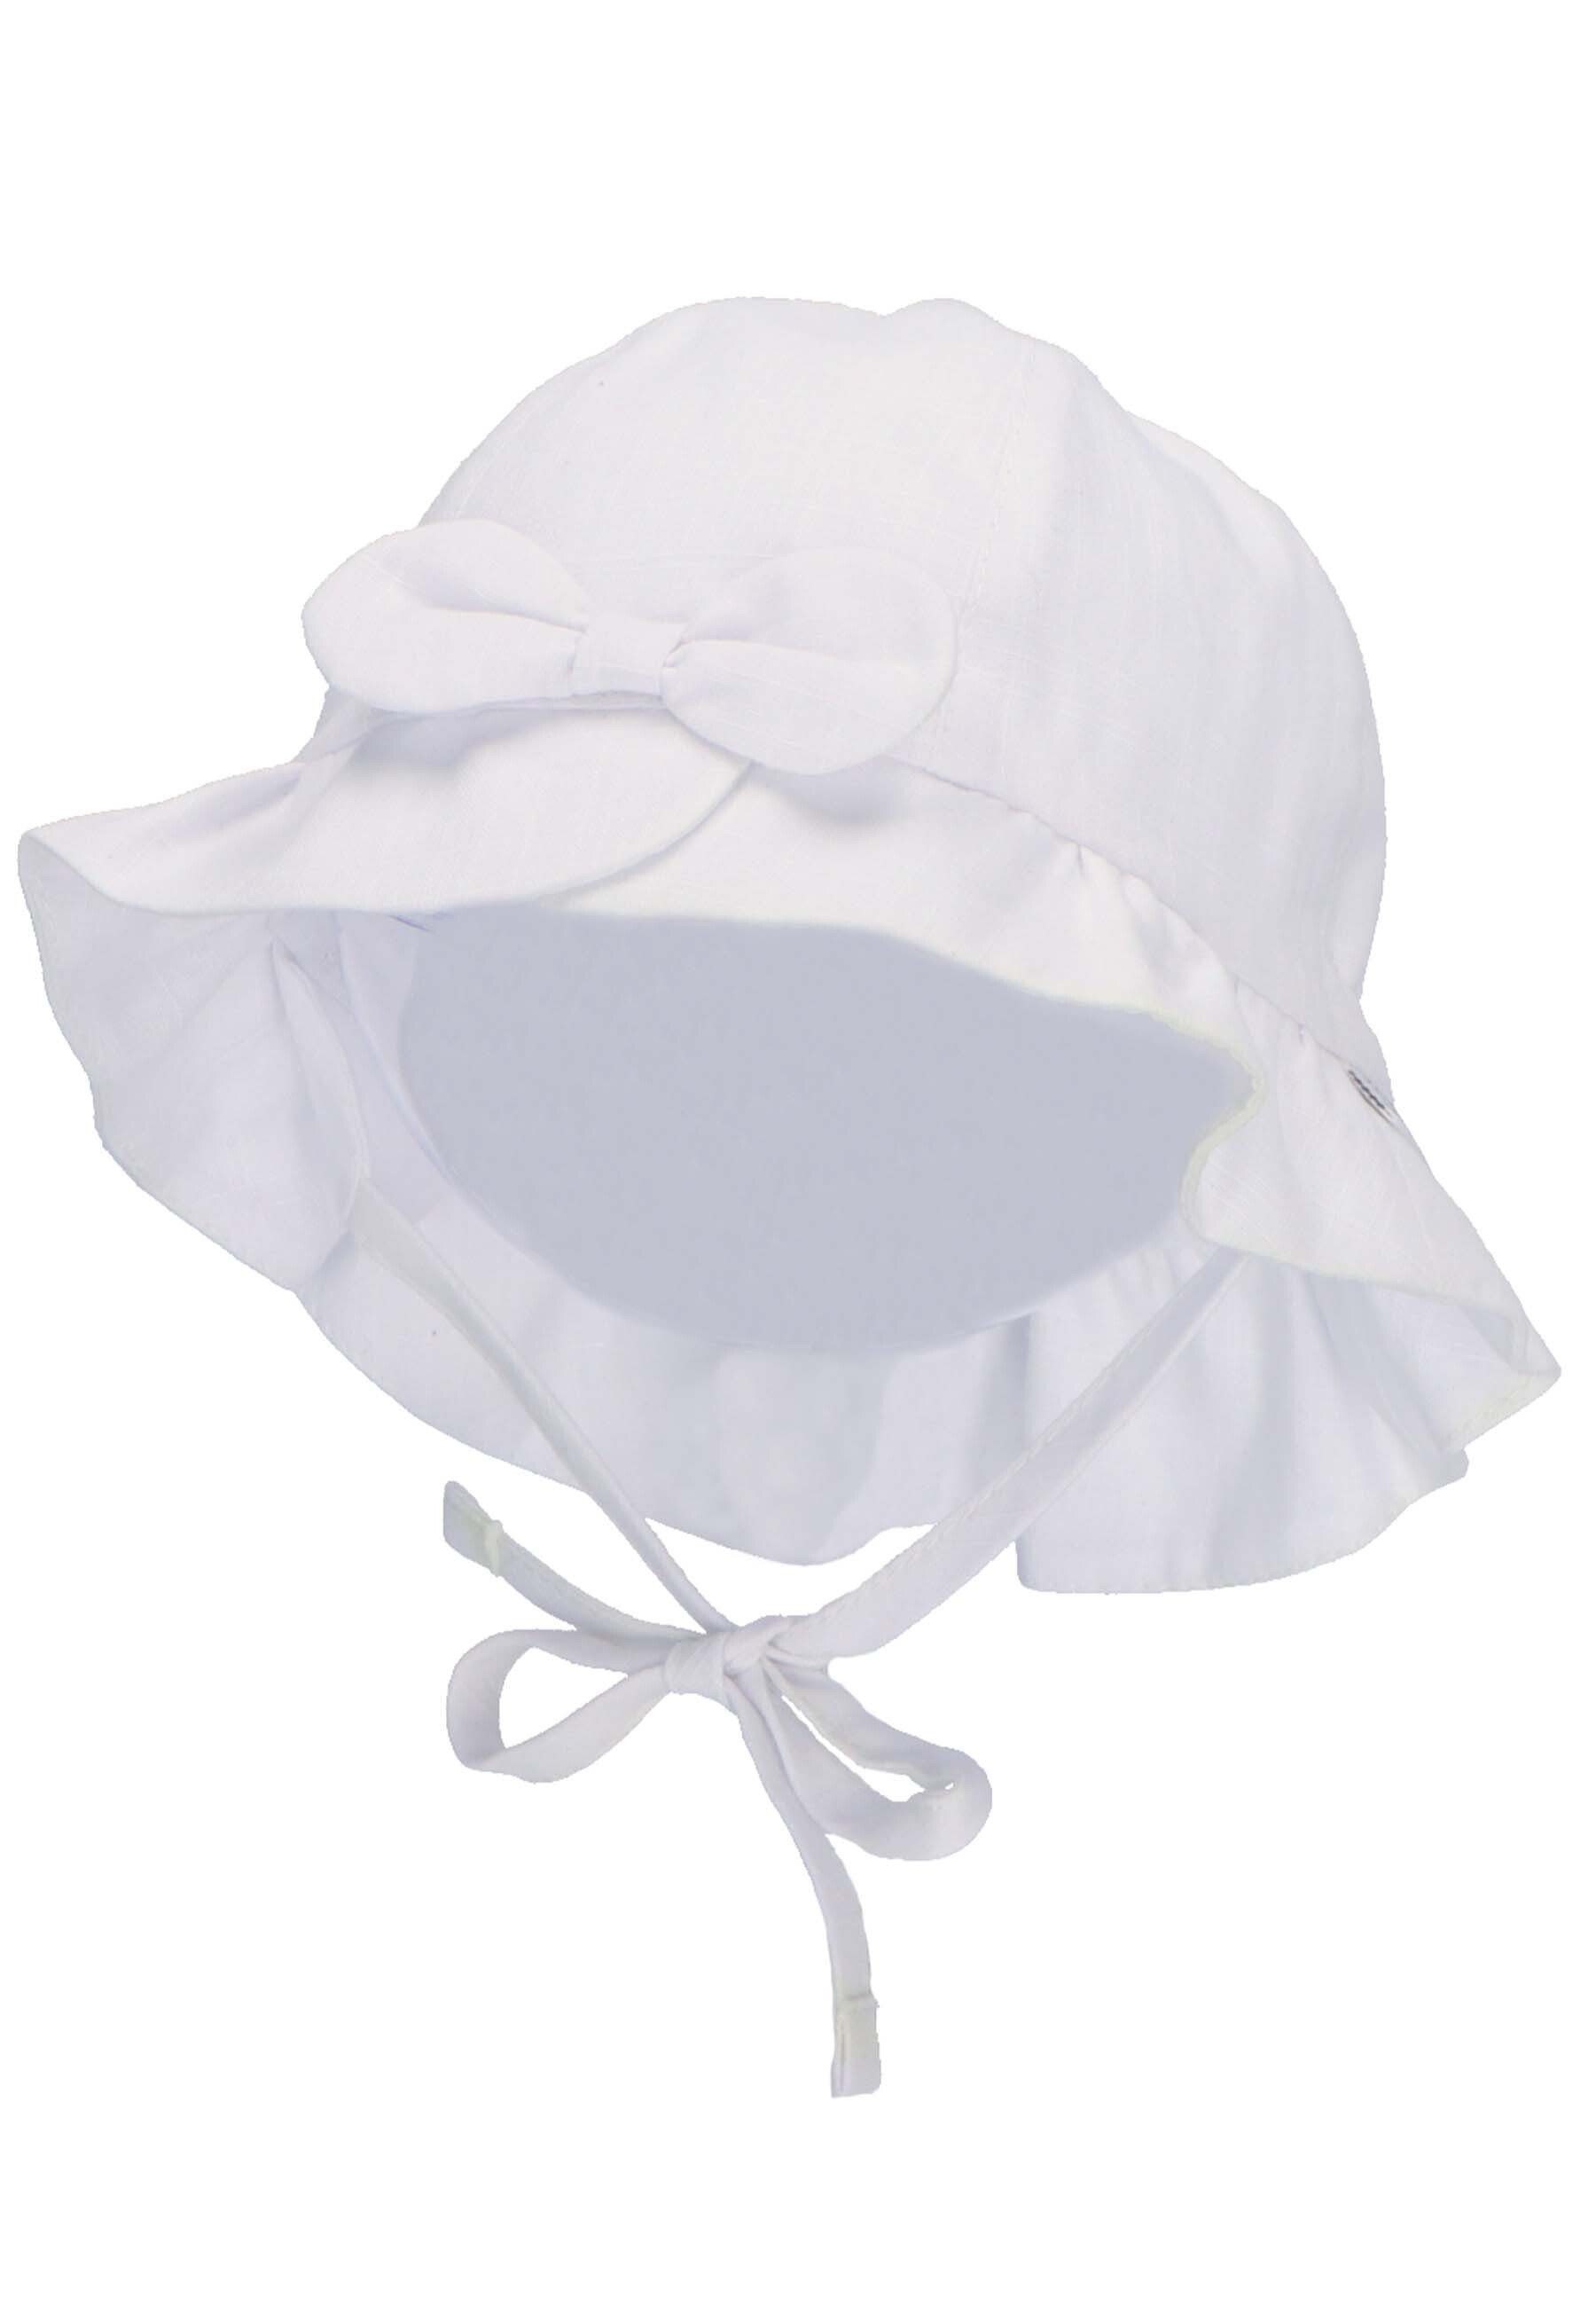 (1-St) Ballonmütze Hut Sterntaler® Leinencharakter weiß